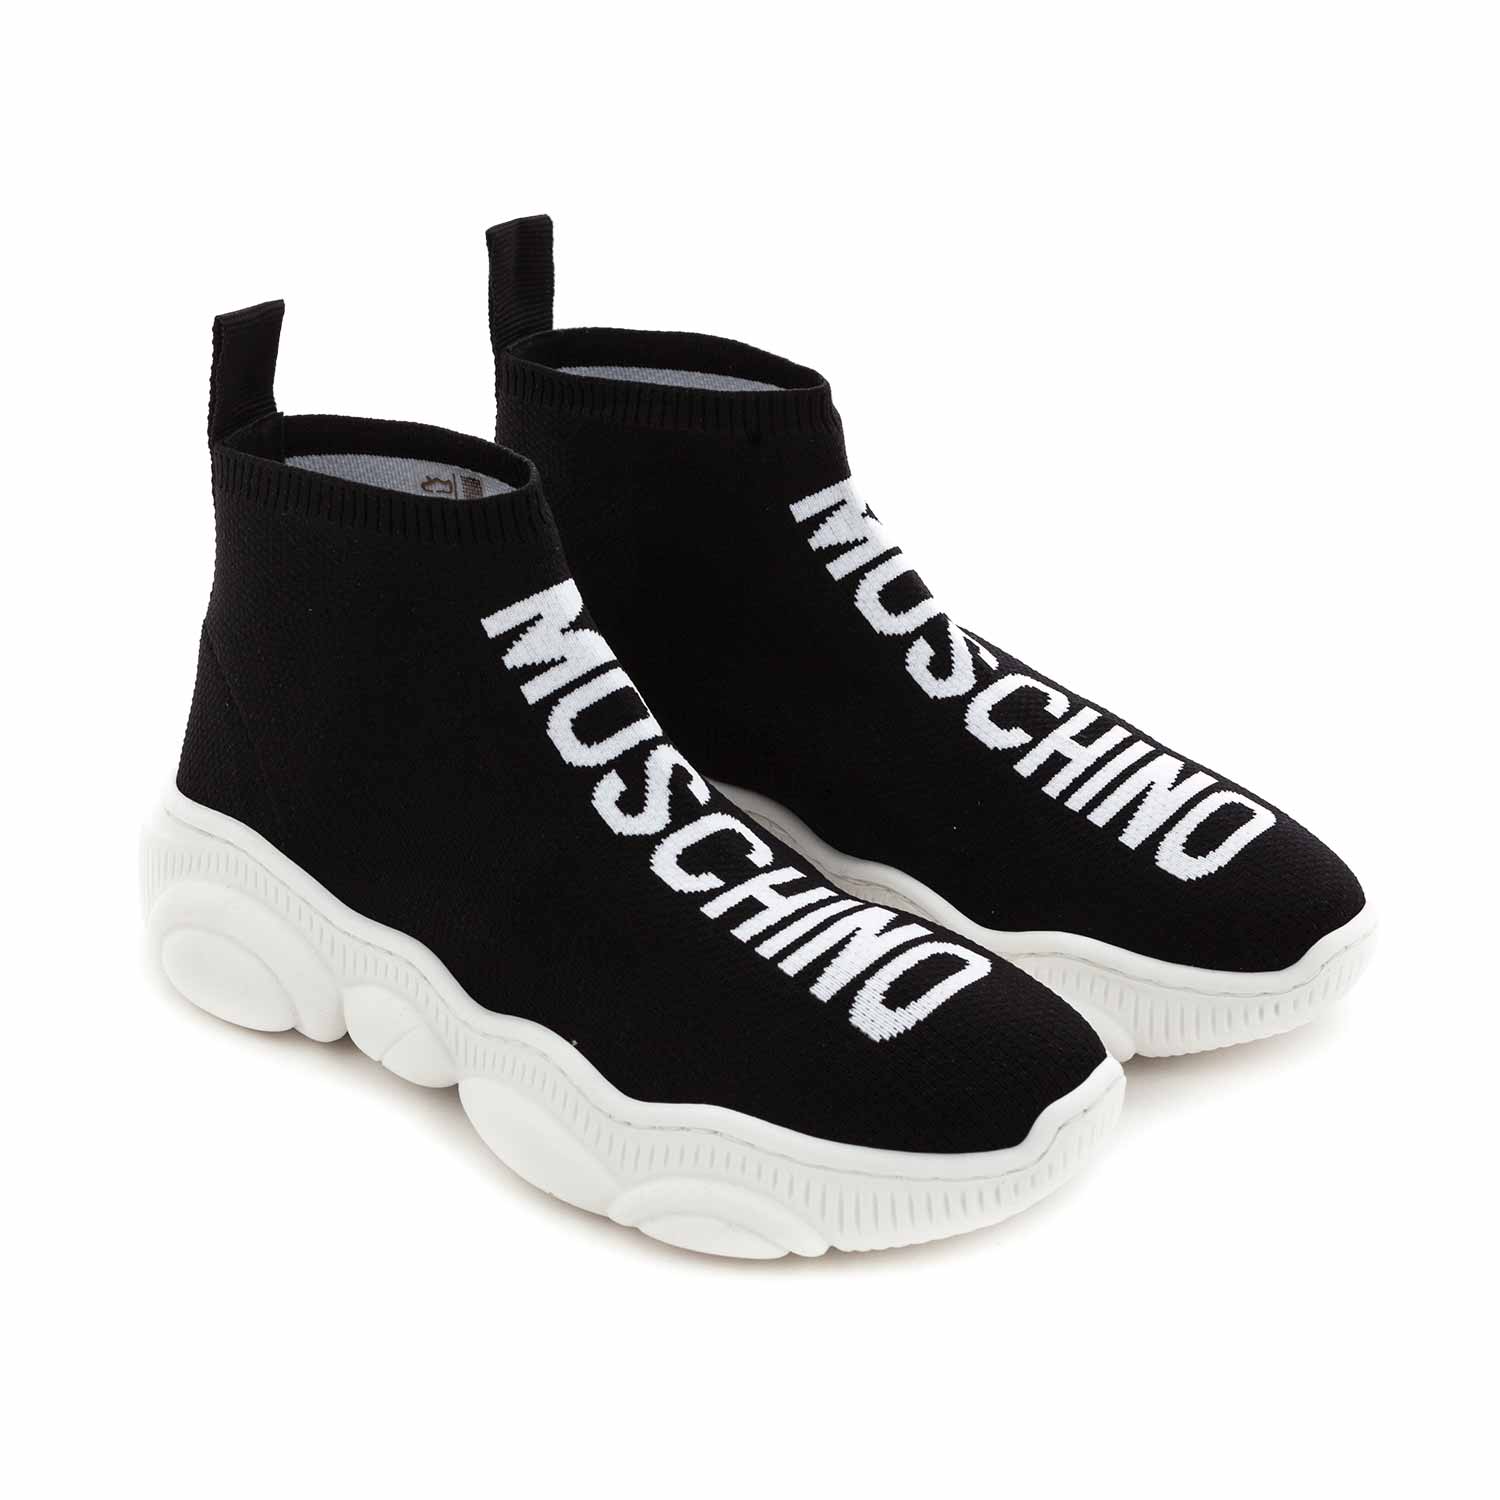 Moschino - Sneakers Slip On Nere Unisex - annameglio.com shop online